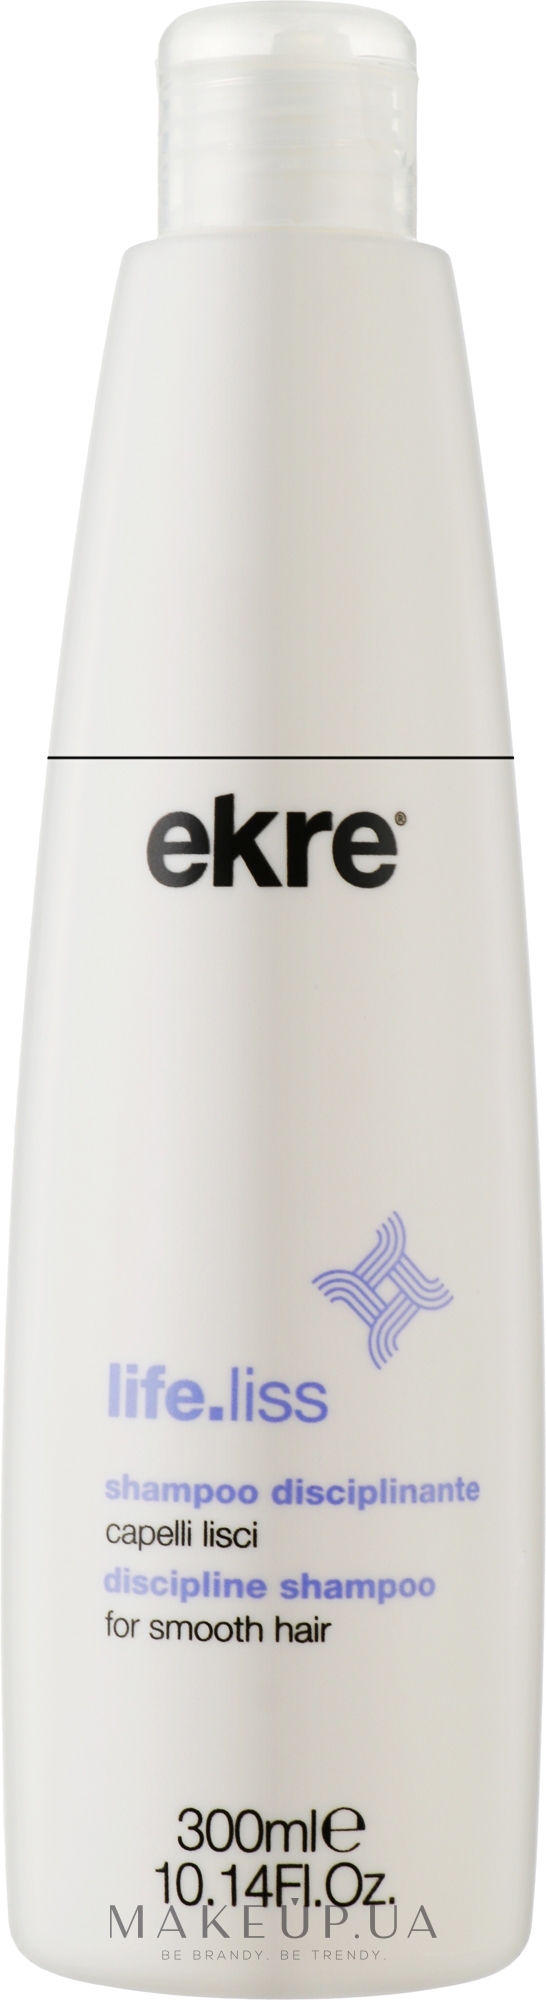 Шампунь для гладкости волос - Ekre Life.Liss Discipline Shampoo Smooth Hair  — фото 300ml